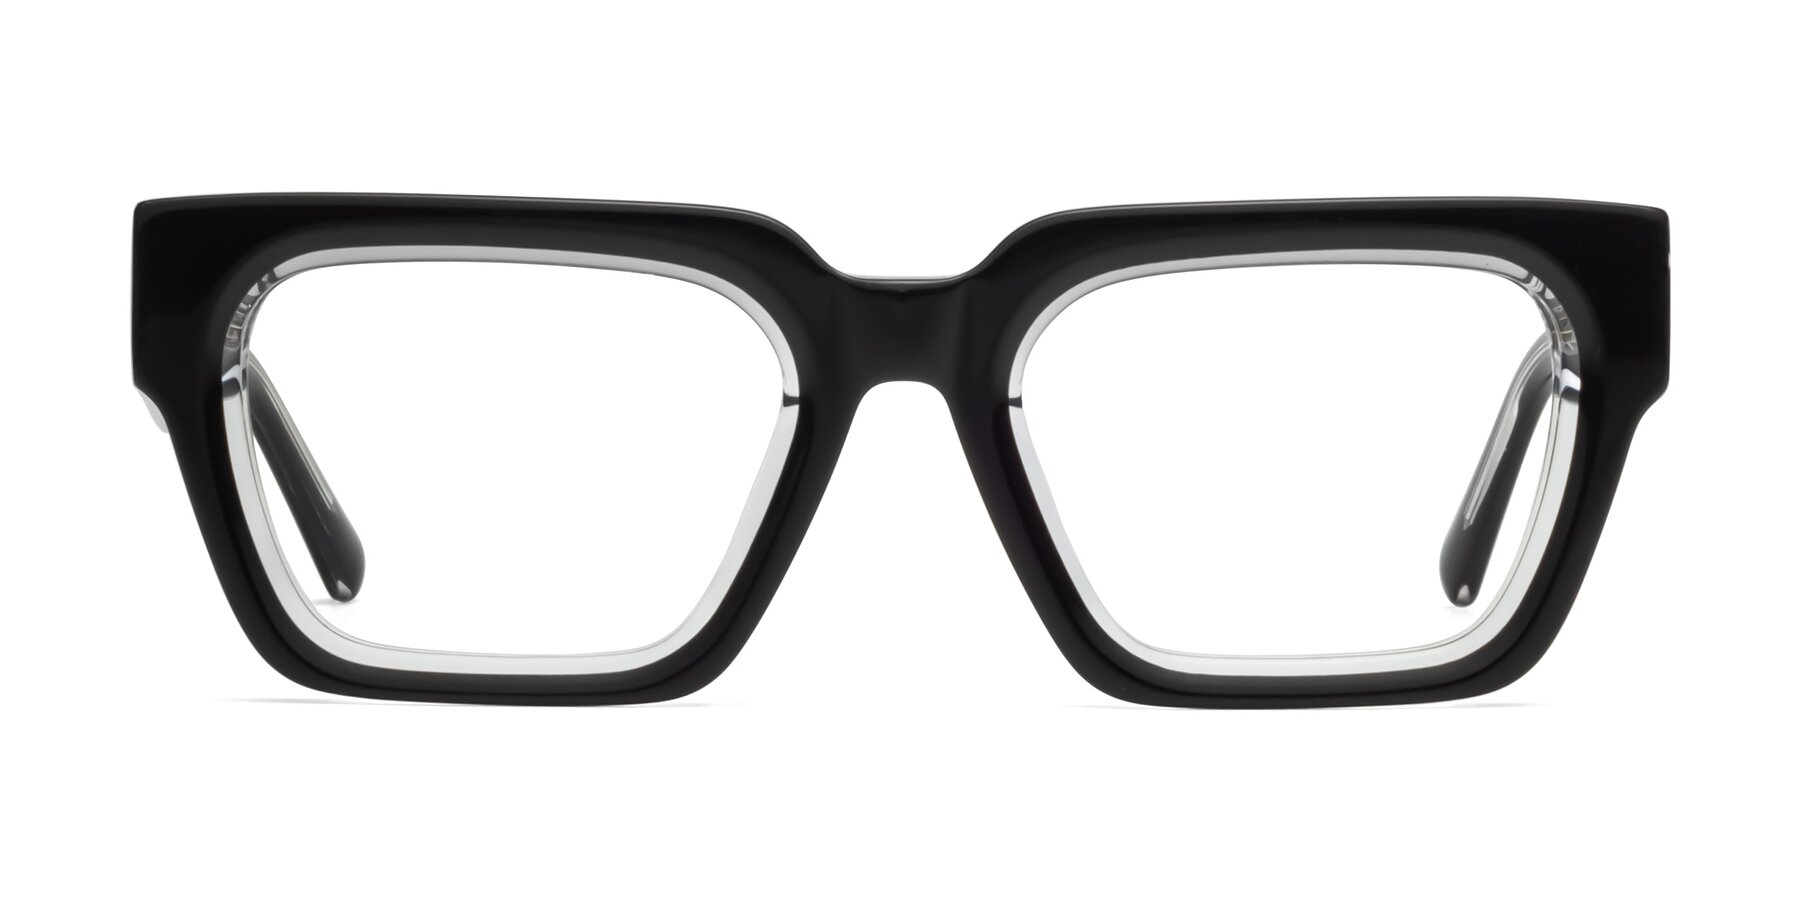 Hardy - Black / Clear Sunglasses Frame